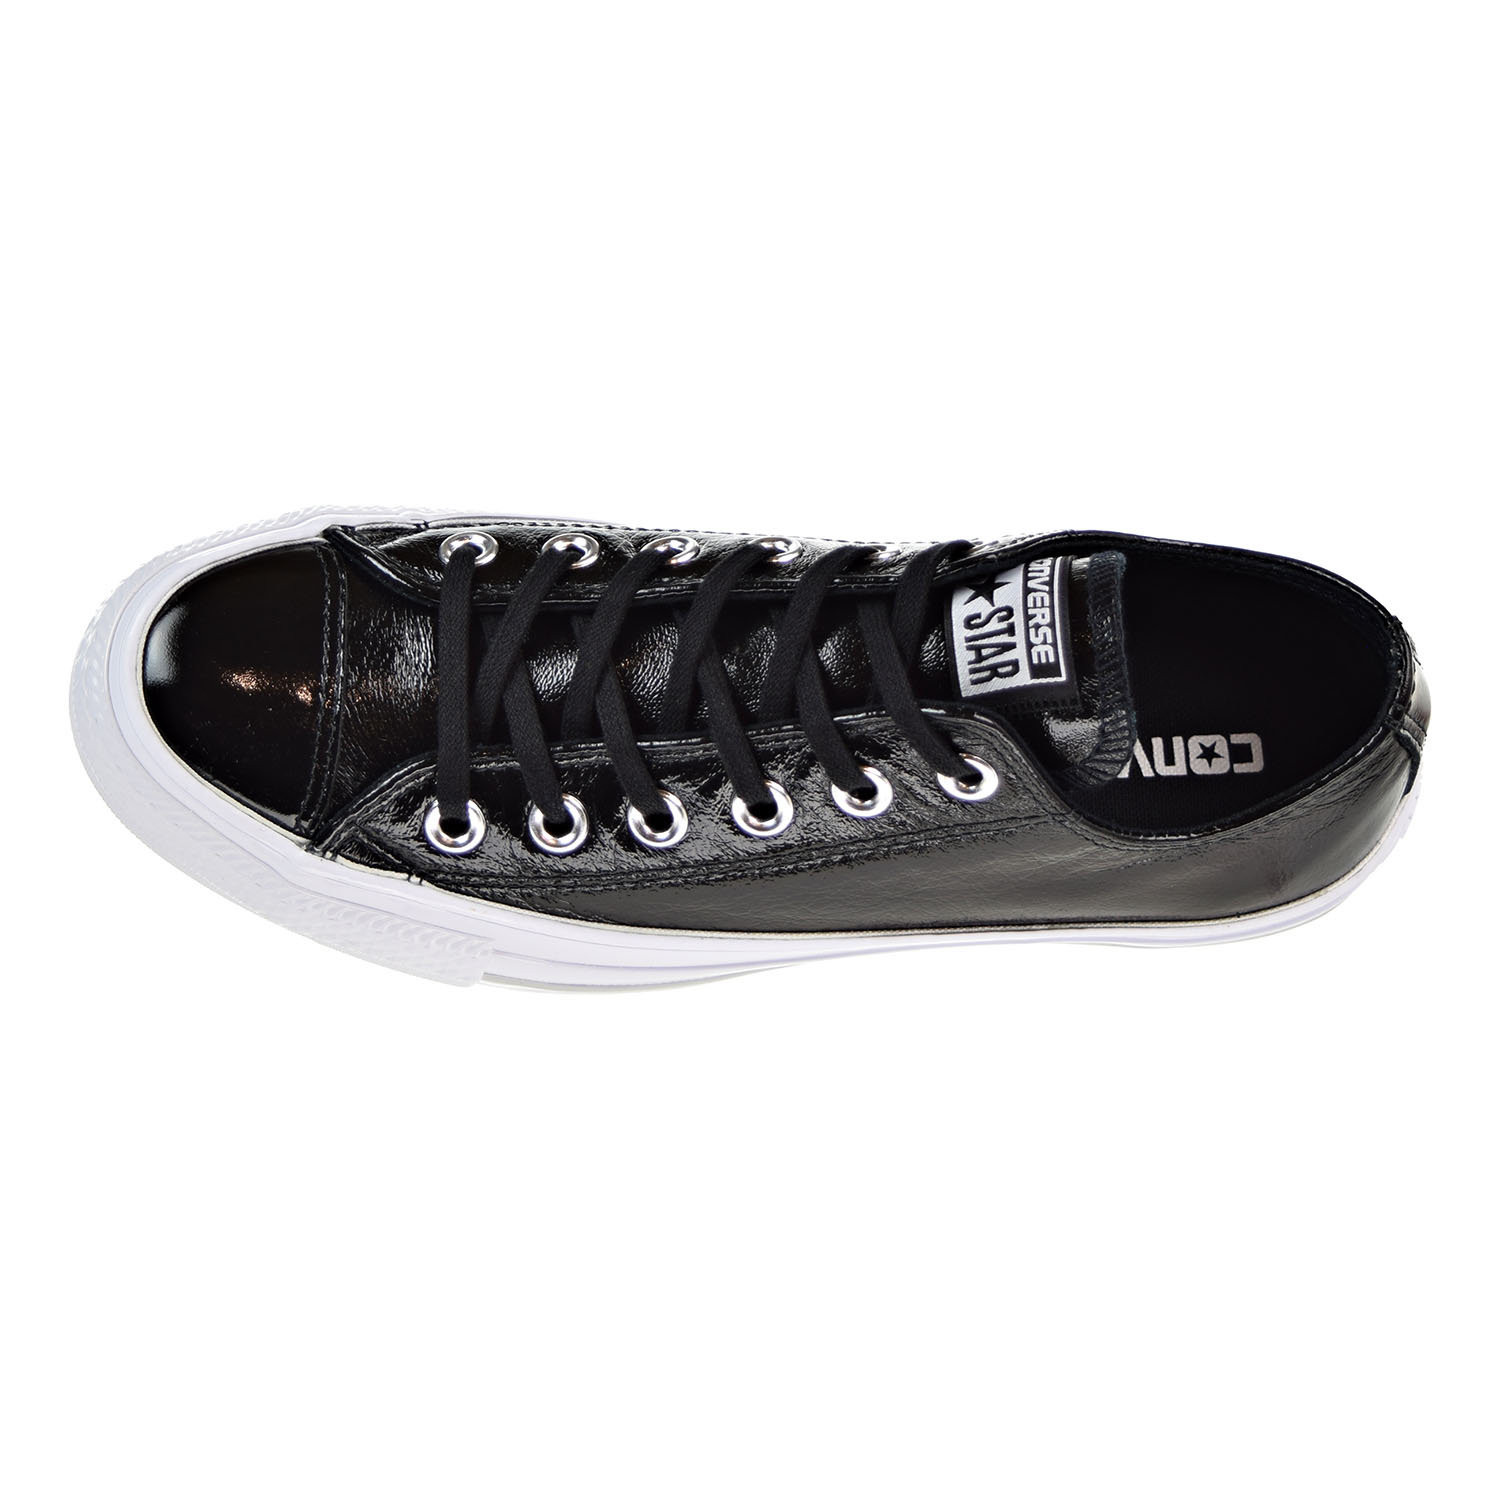 Converse  Chuck Taylor All Star Ox Women's Shoes  Black/White 558002c (6 B(M) US)